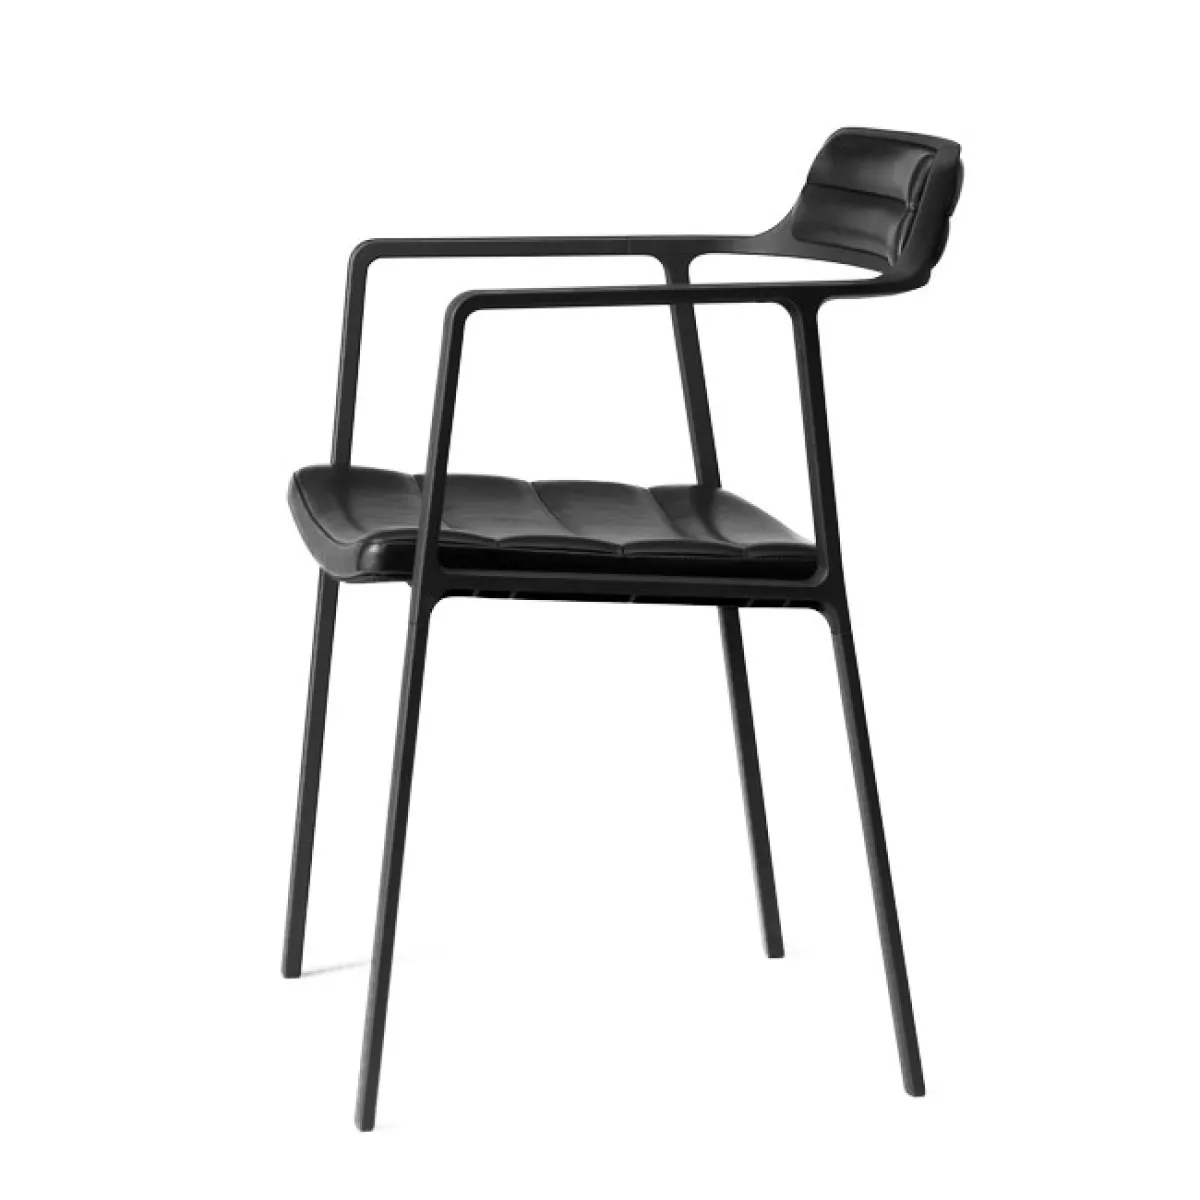 #3 - Vipp 451 Chair (Læder)